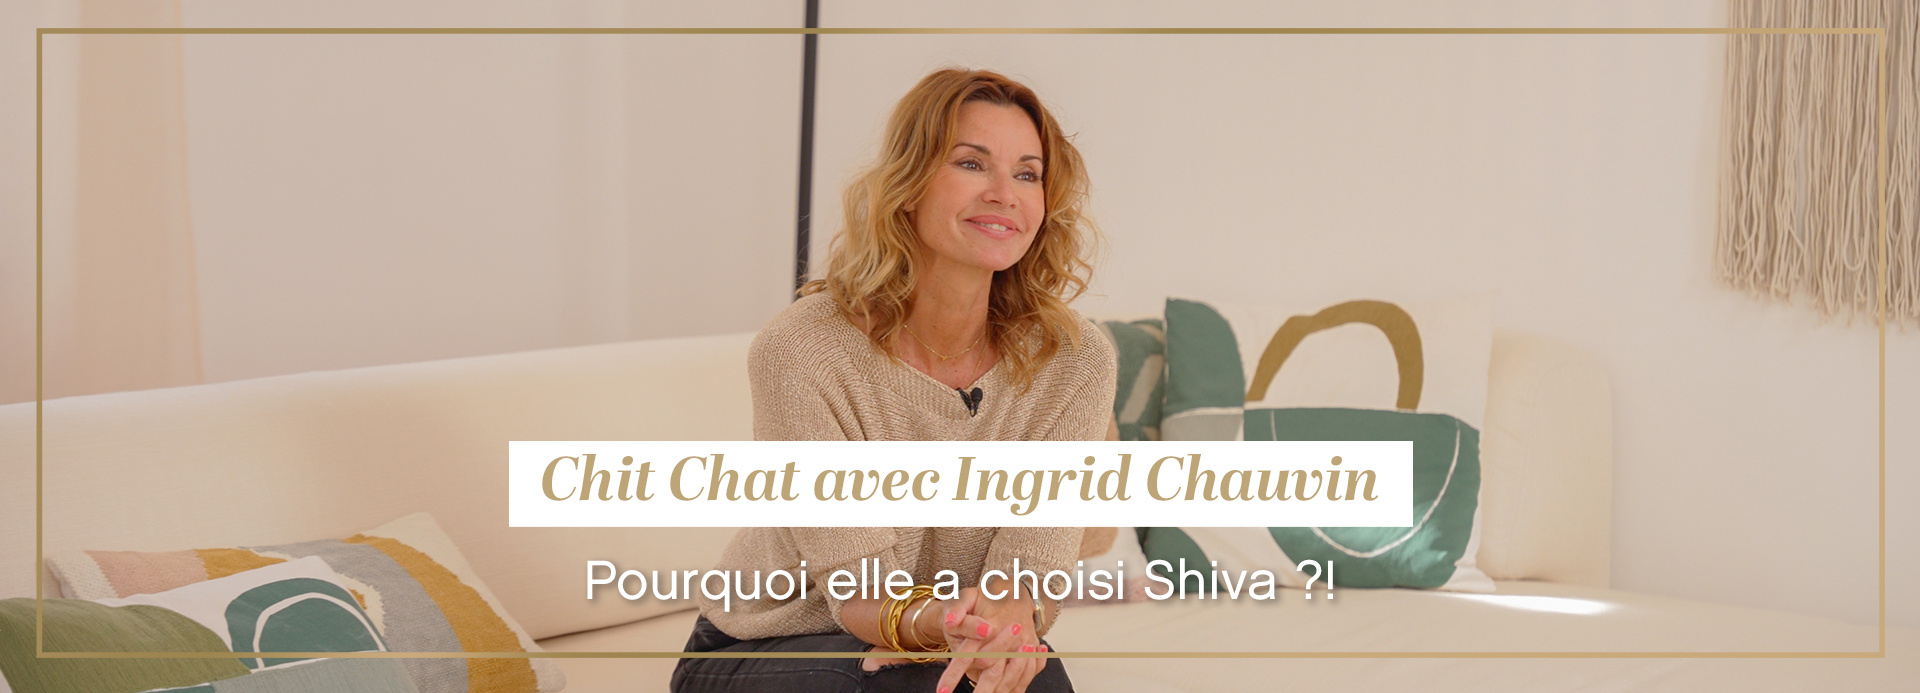 Chit Chat avec Ingrid Chauvin